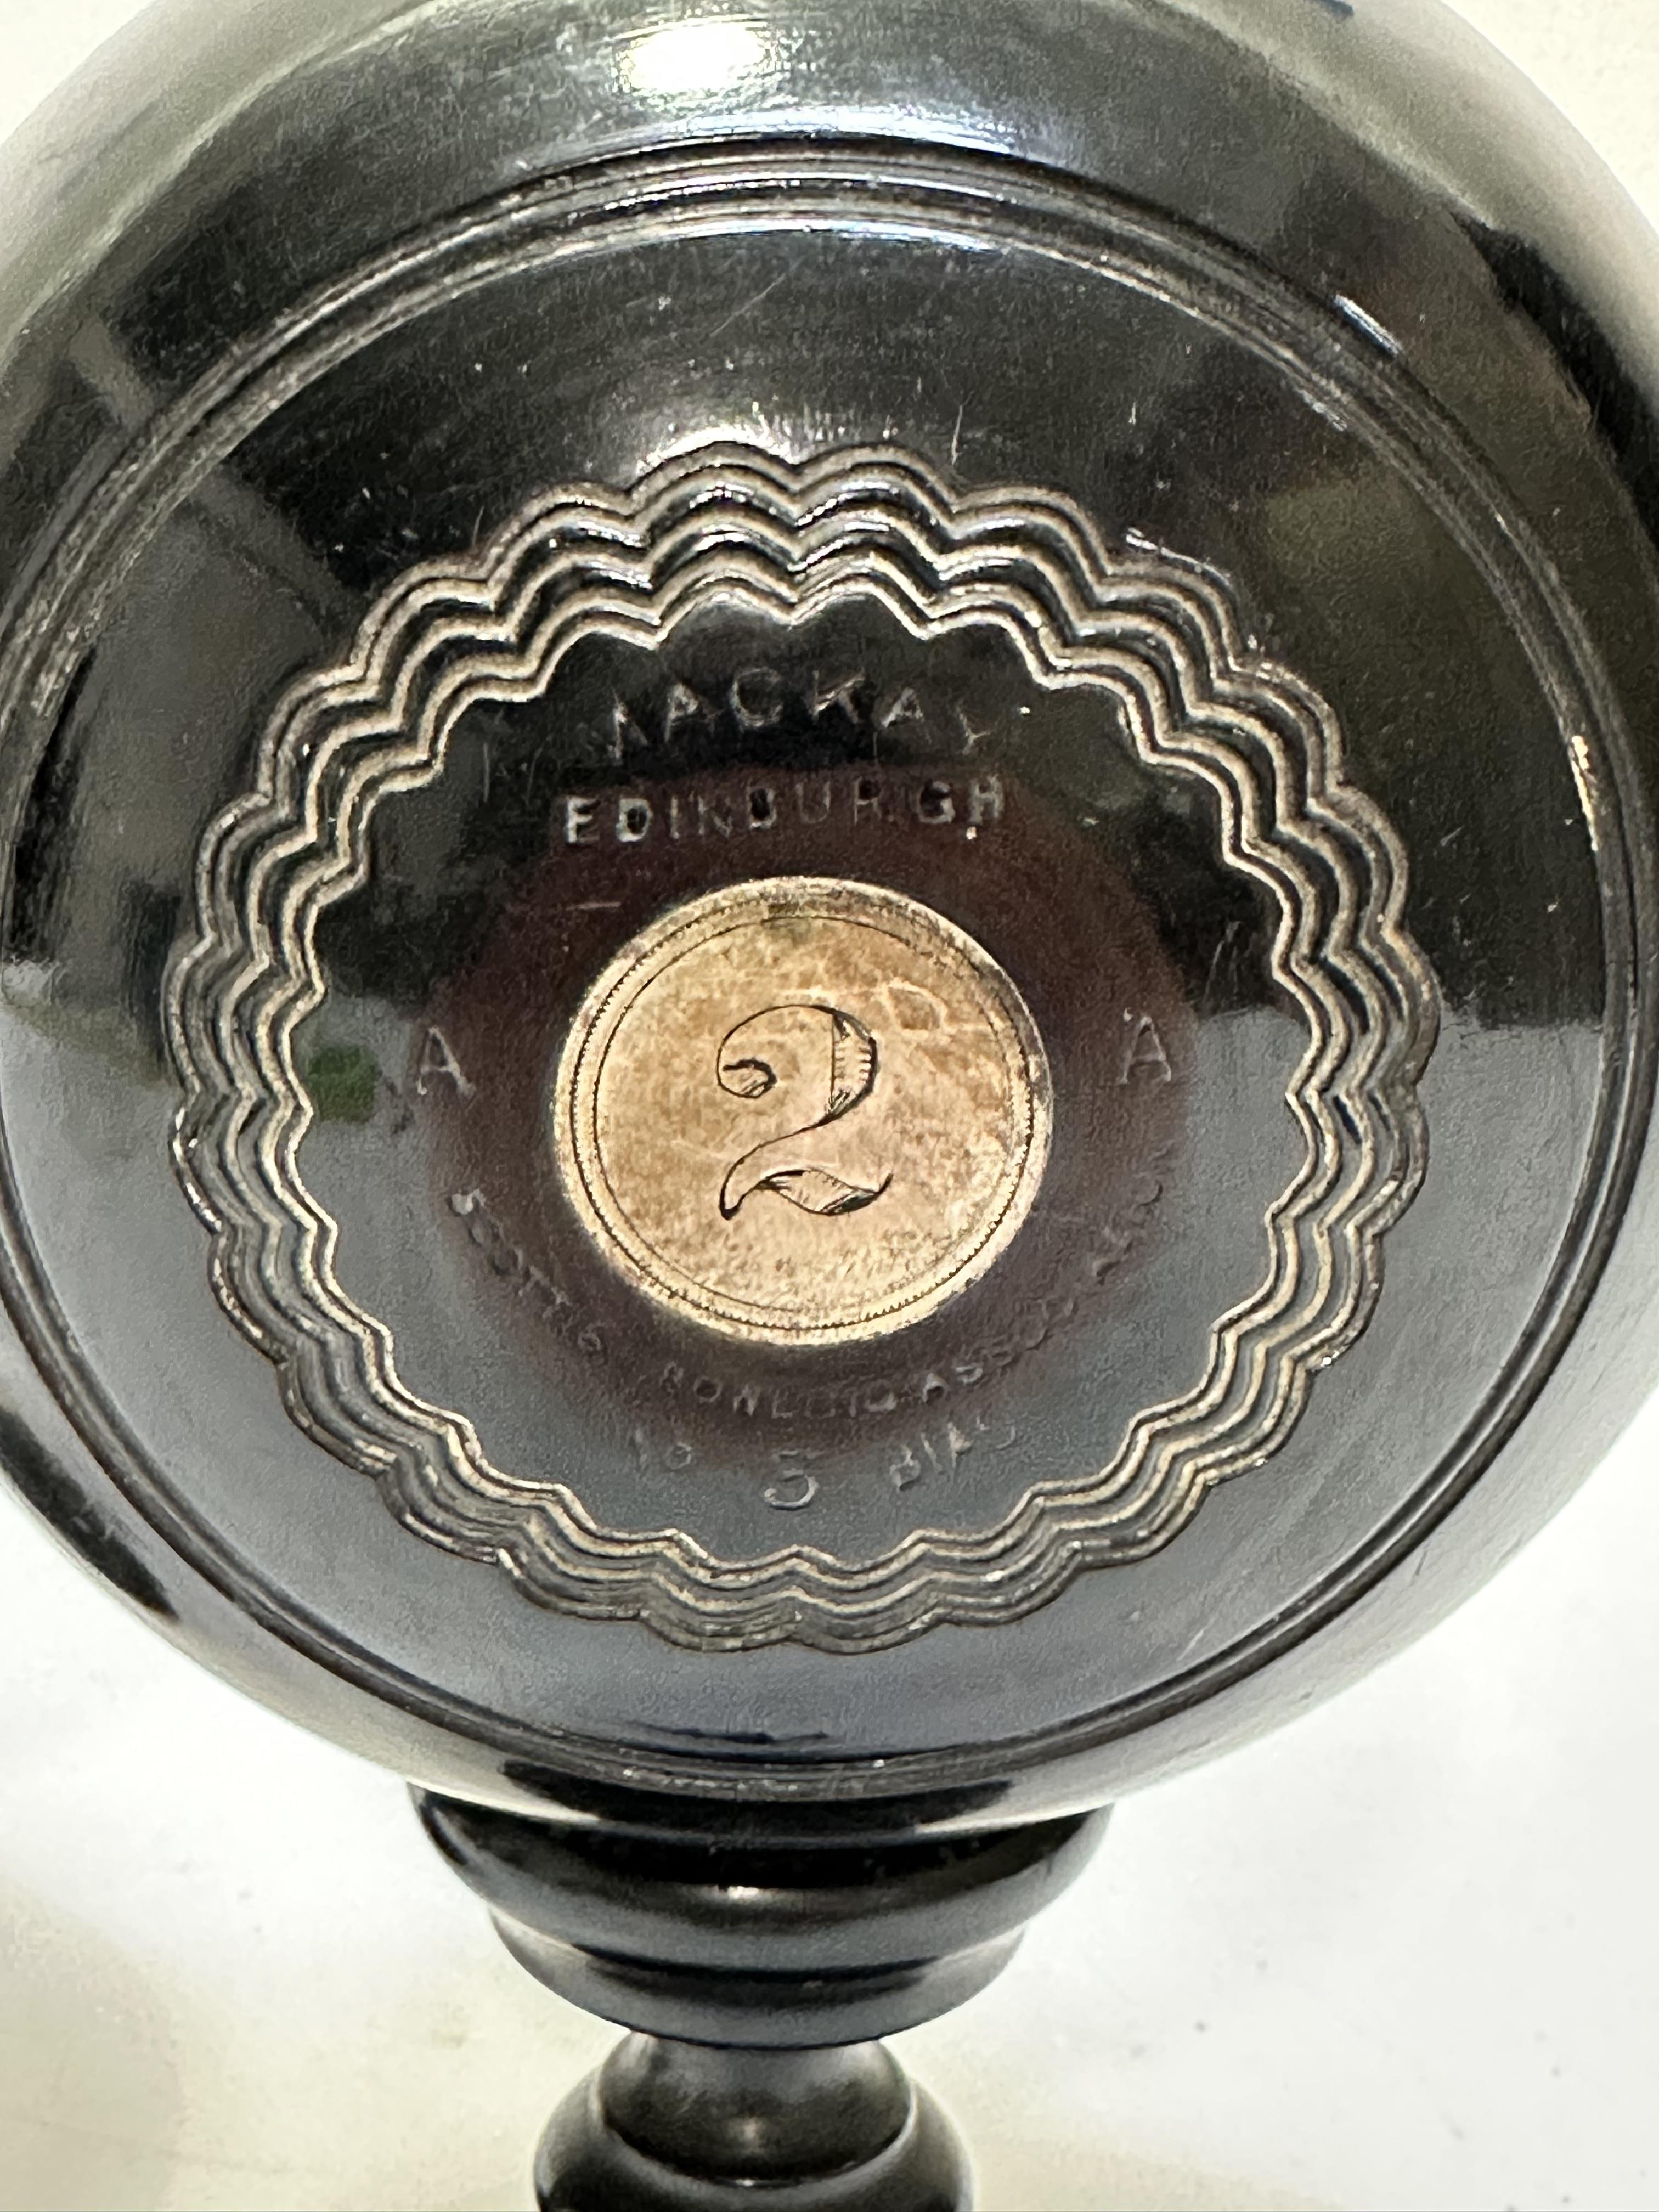 A pair of ebony silver mounted bowls by Mackay of Edinburgh, Scottish Bowling Association - Image 4 of 5